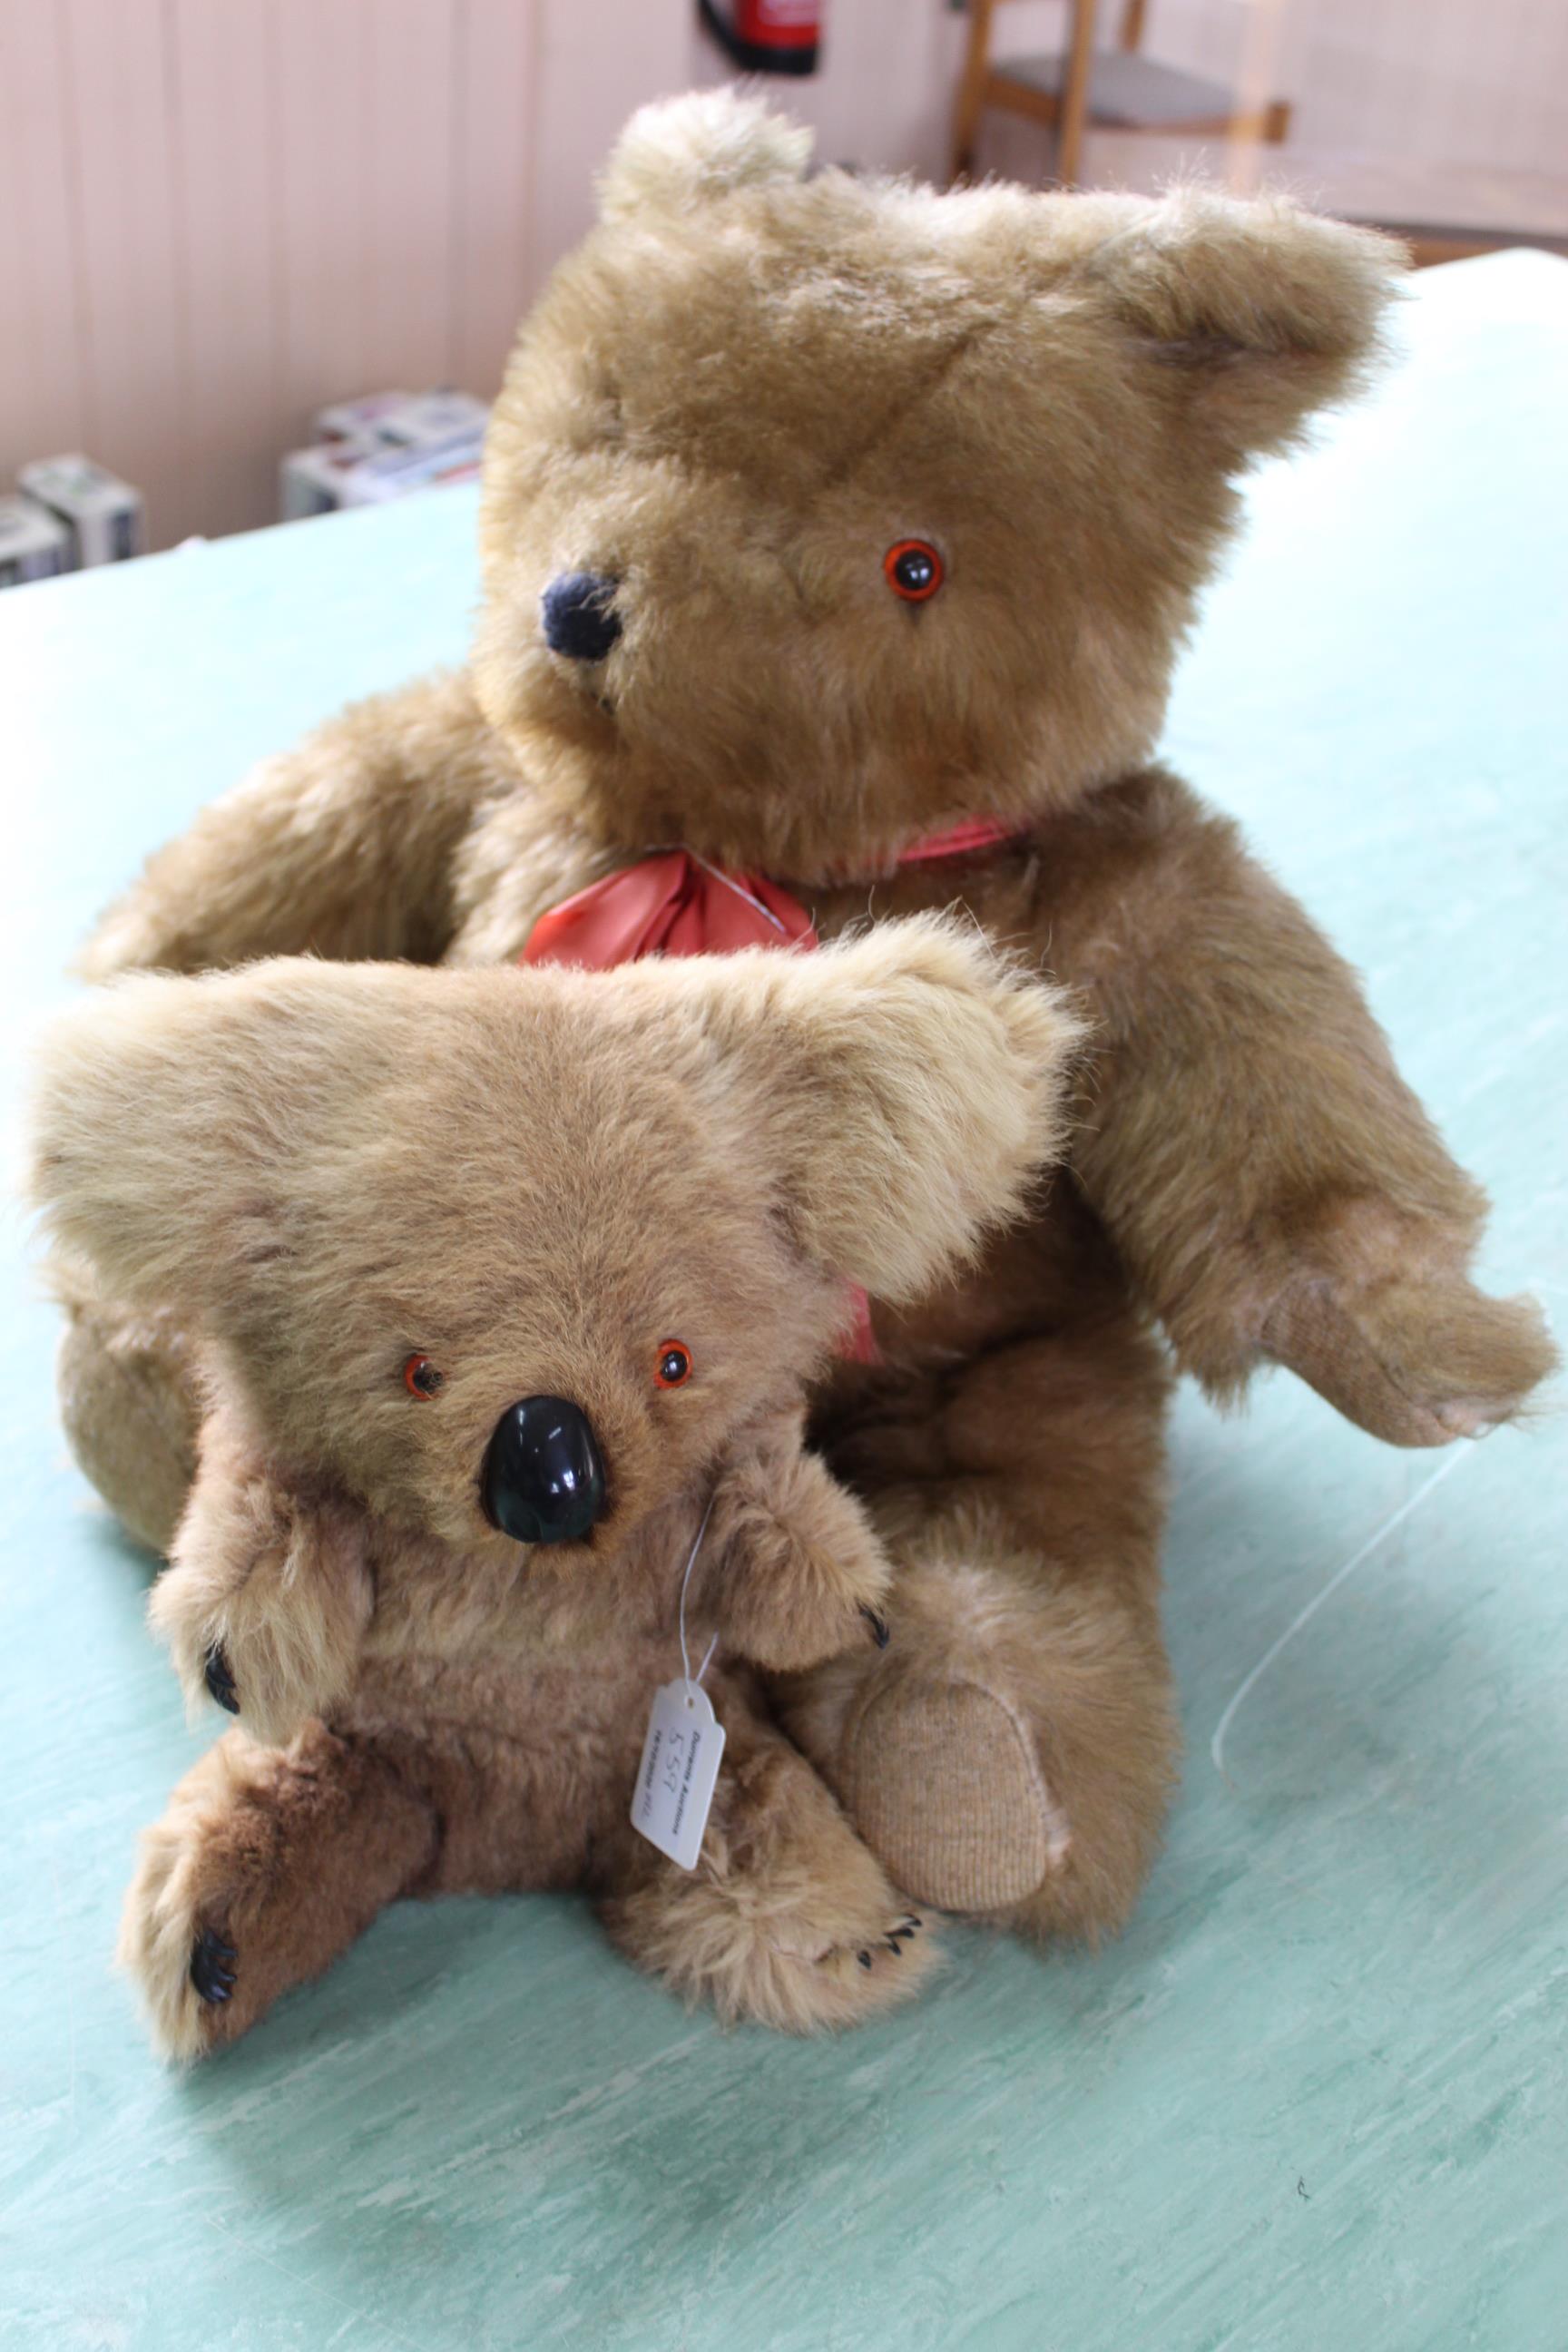 A large sized Teddy bear together with a koala bear